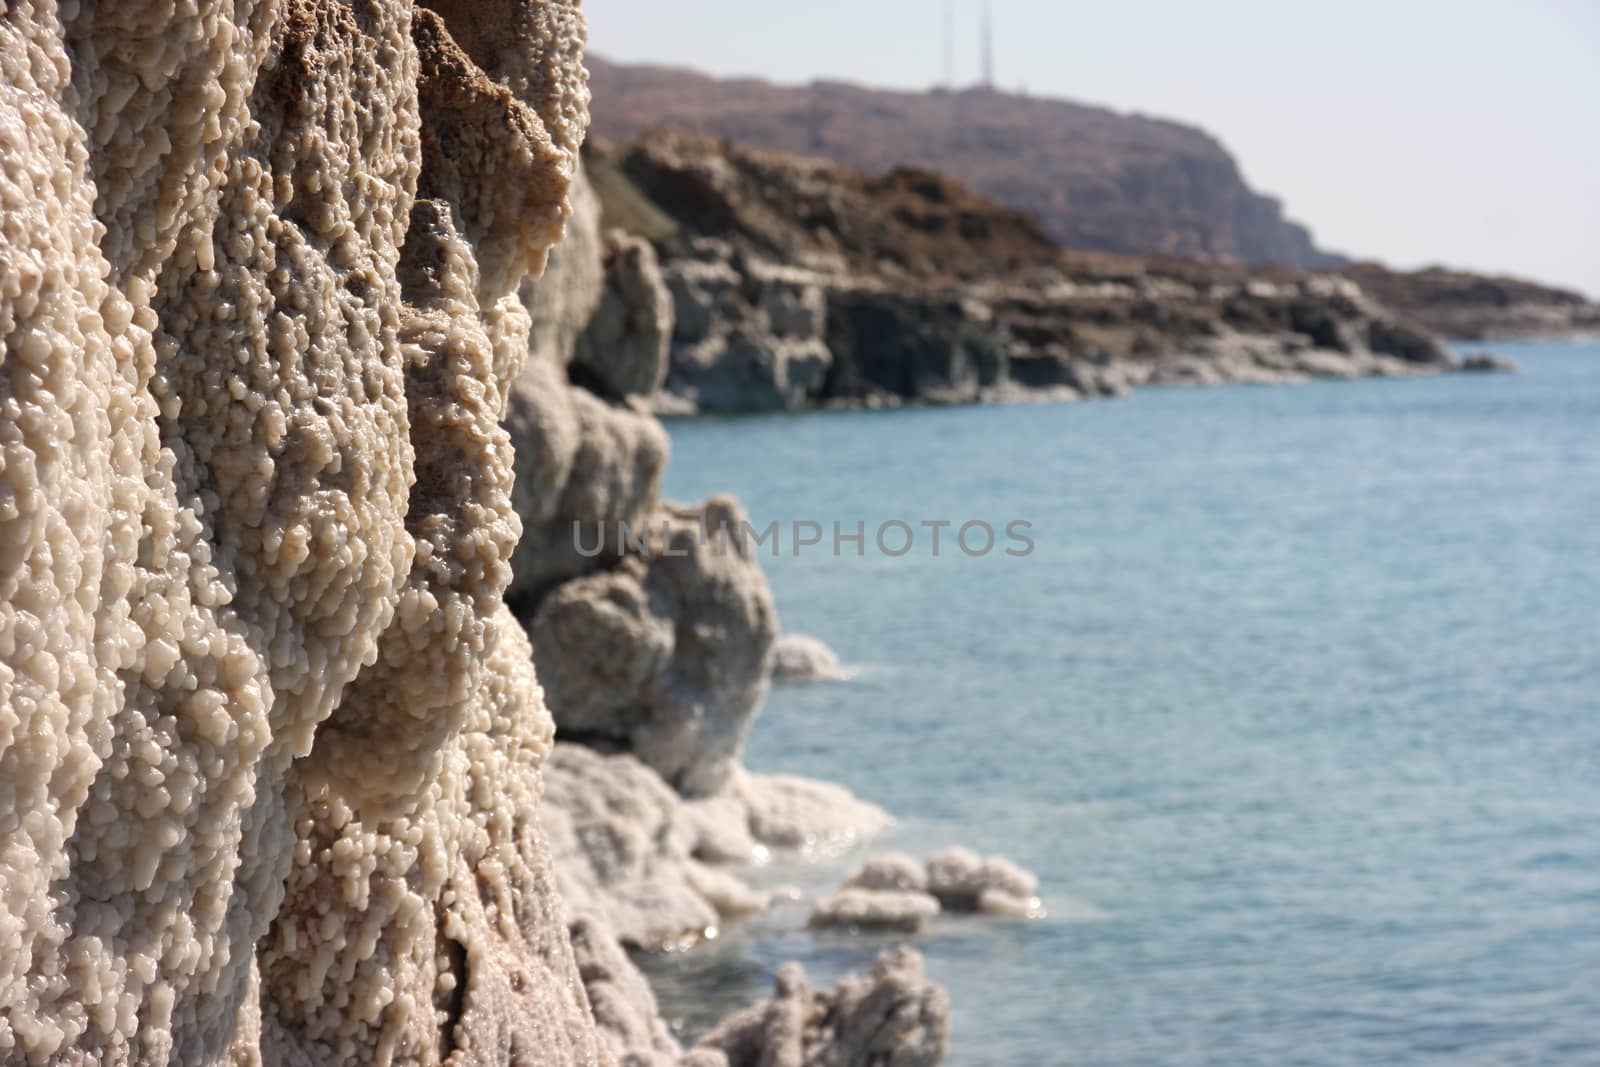 Satly stones at the coast of dead sea